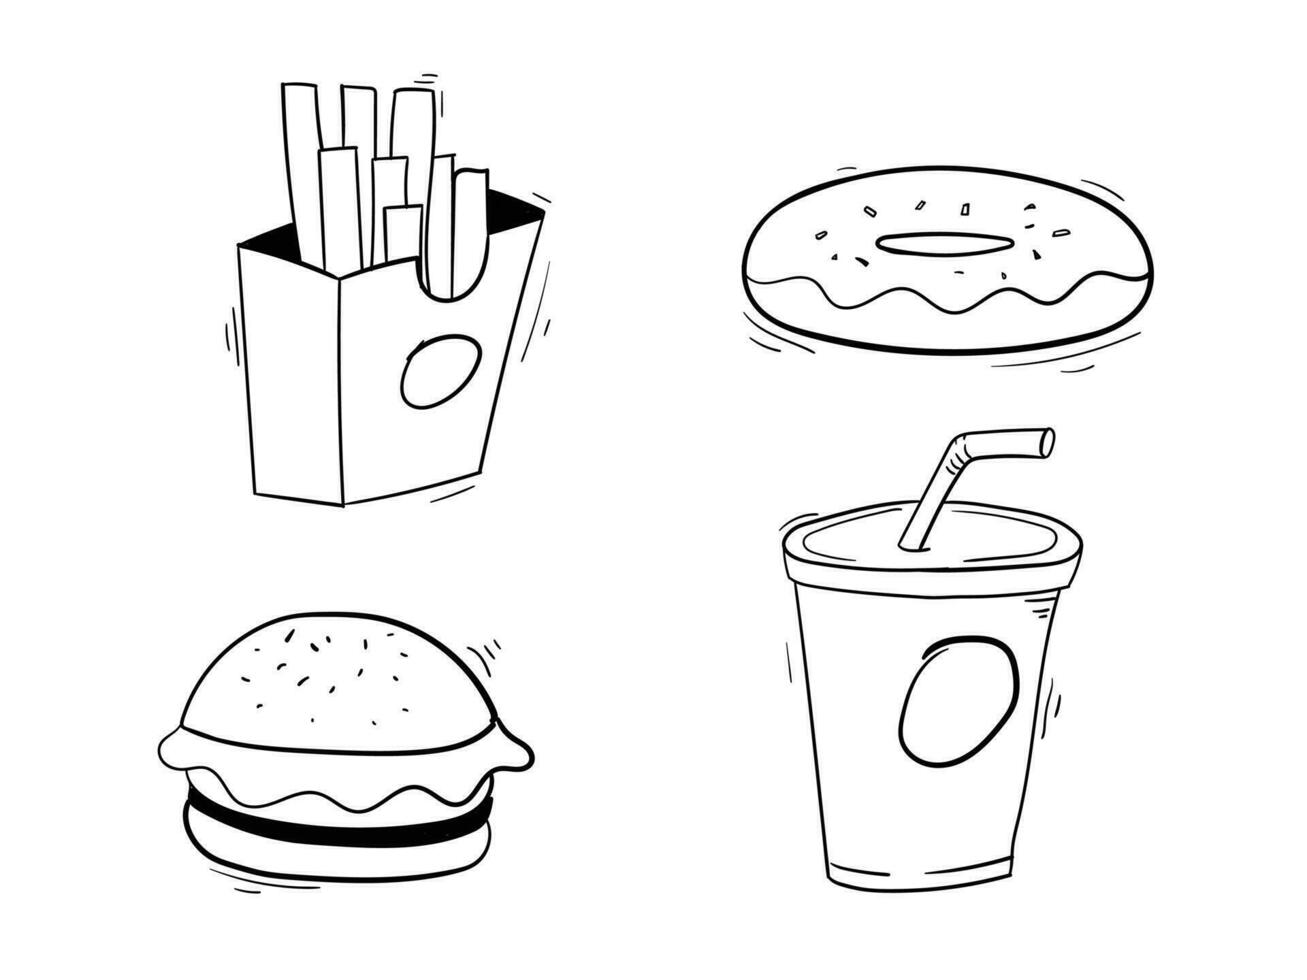 snel voedsel pictogrammen set. hamburger, donut, Frans Patat, papier kop met drankje. hand- getrokken snel voedsel vector